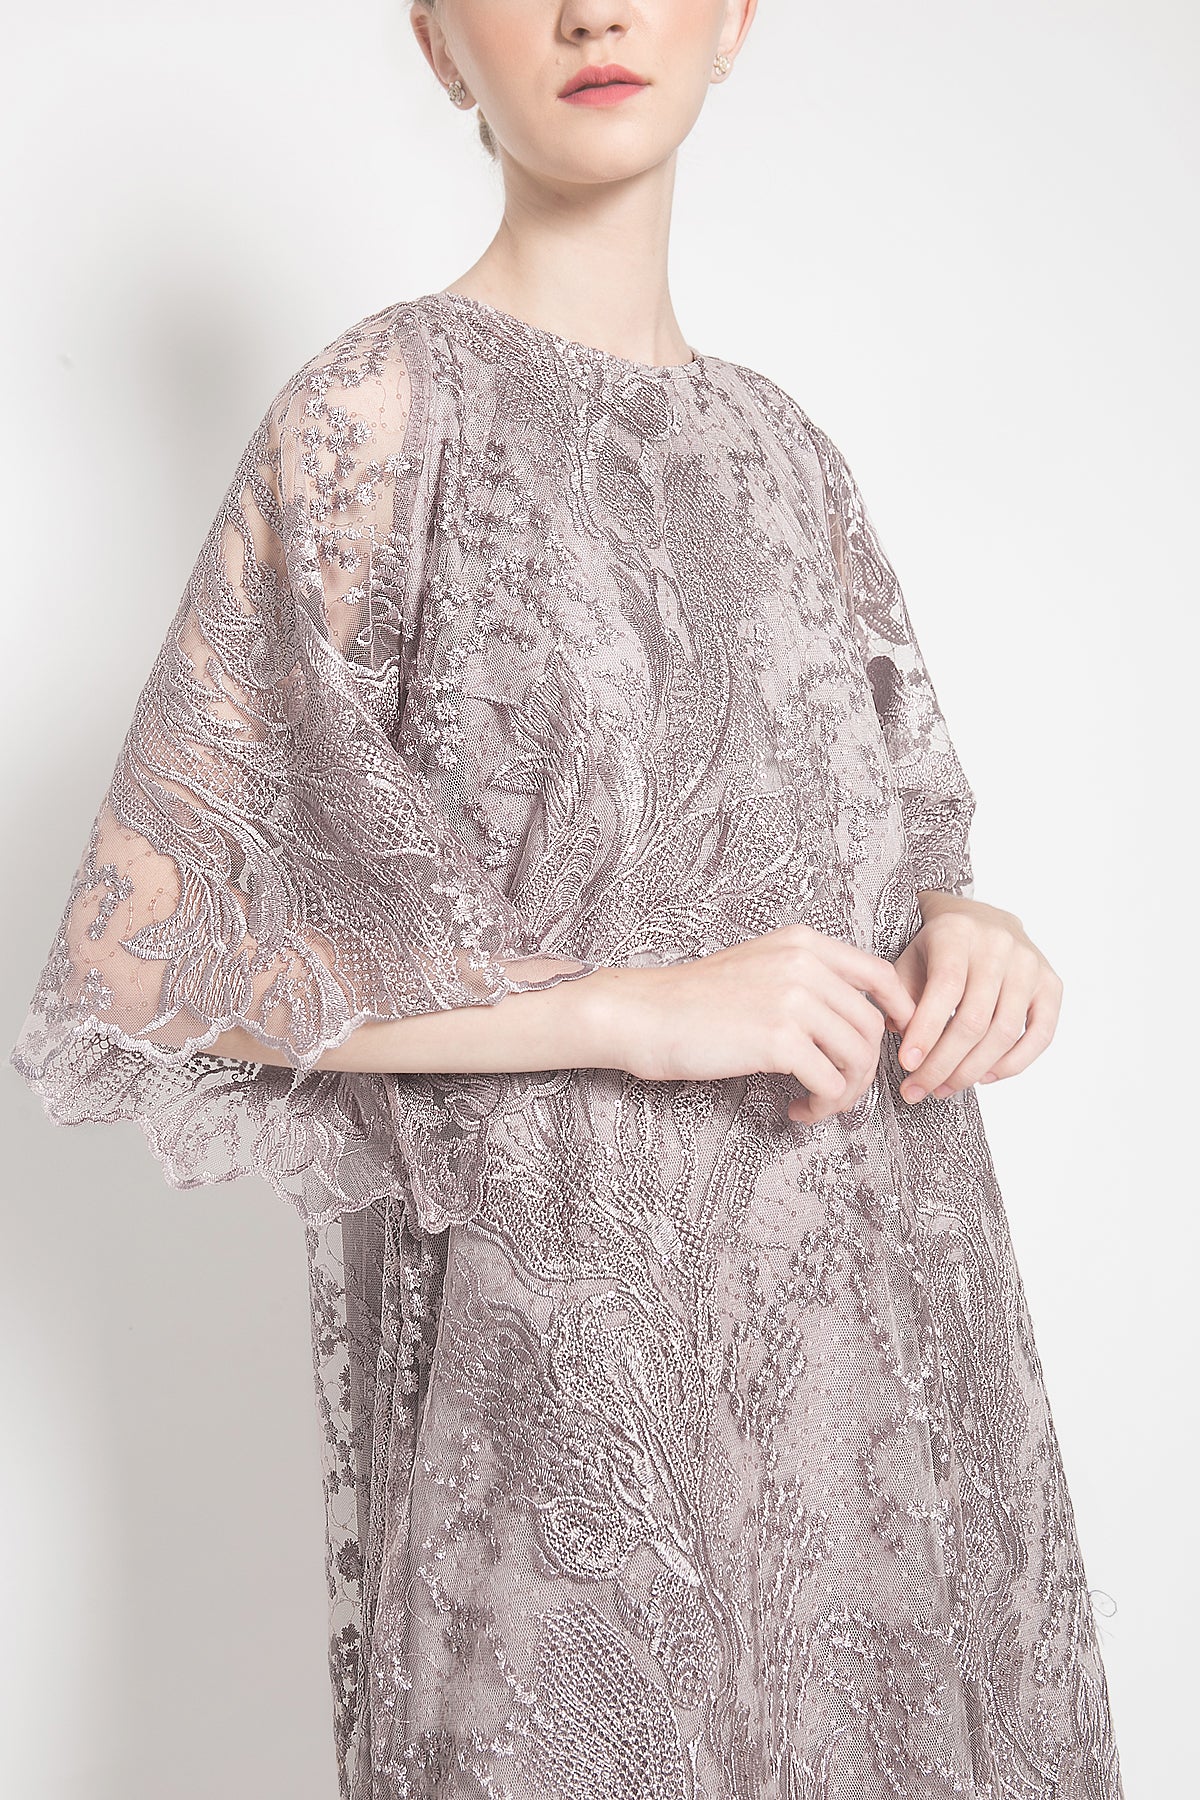 Mireya Dress in Lilac Grey by OURA Dresshaus 